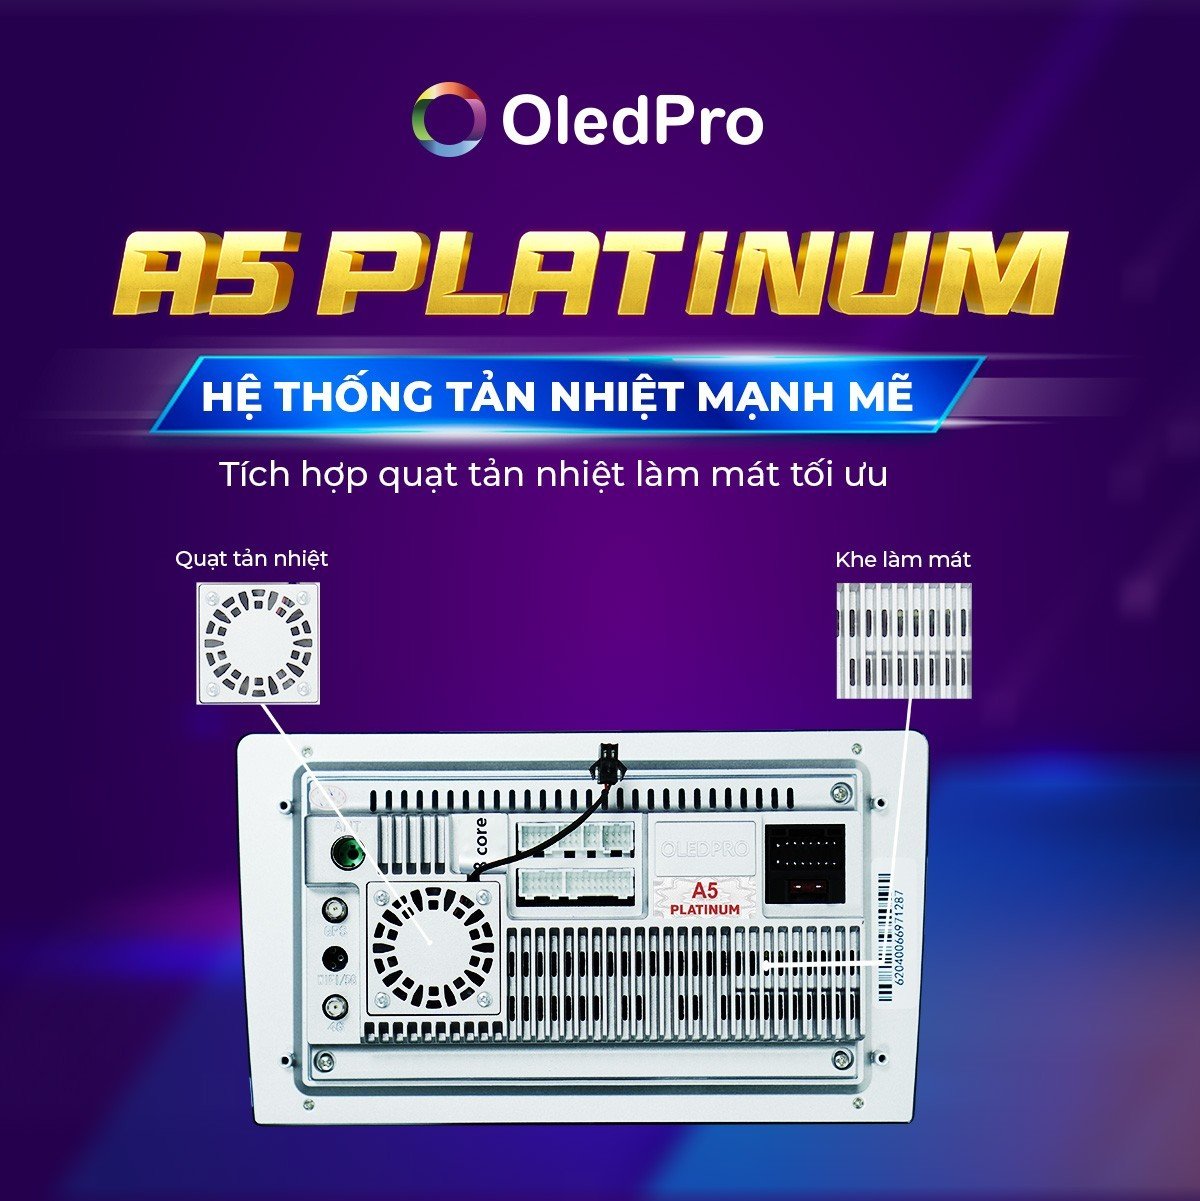 Man Hinh Oledpro A5 Platinum 3